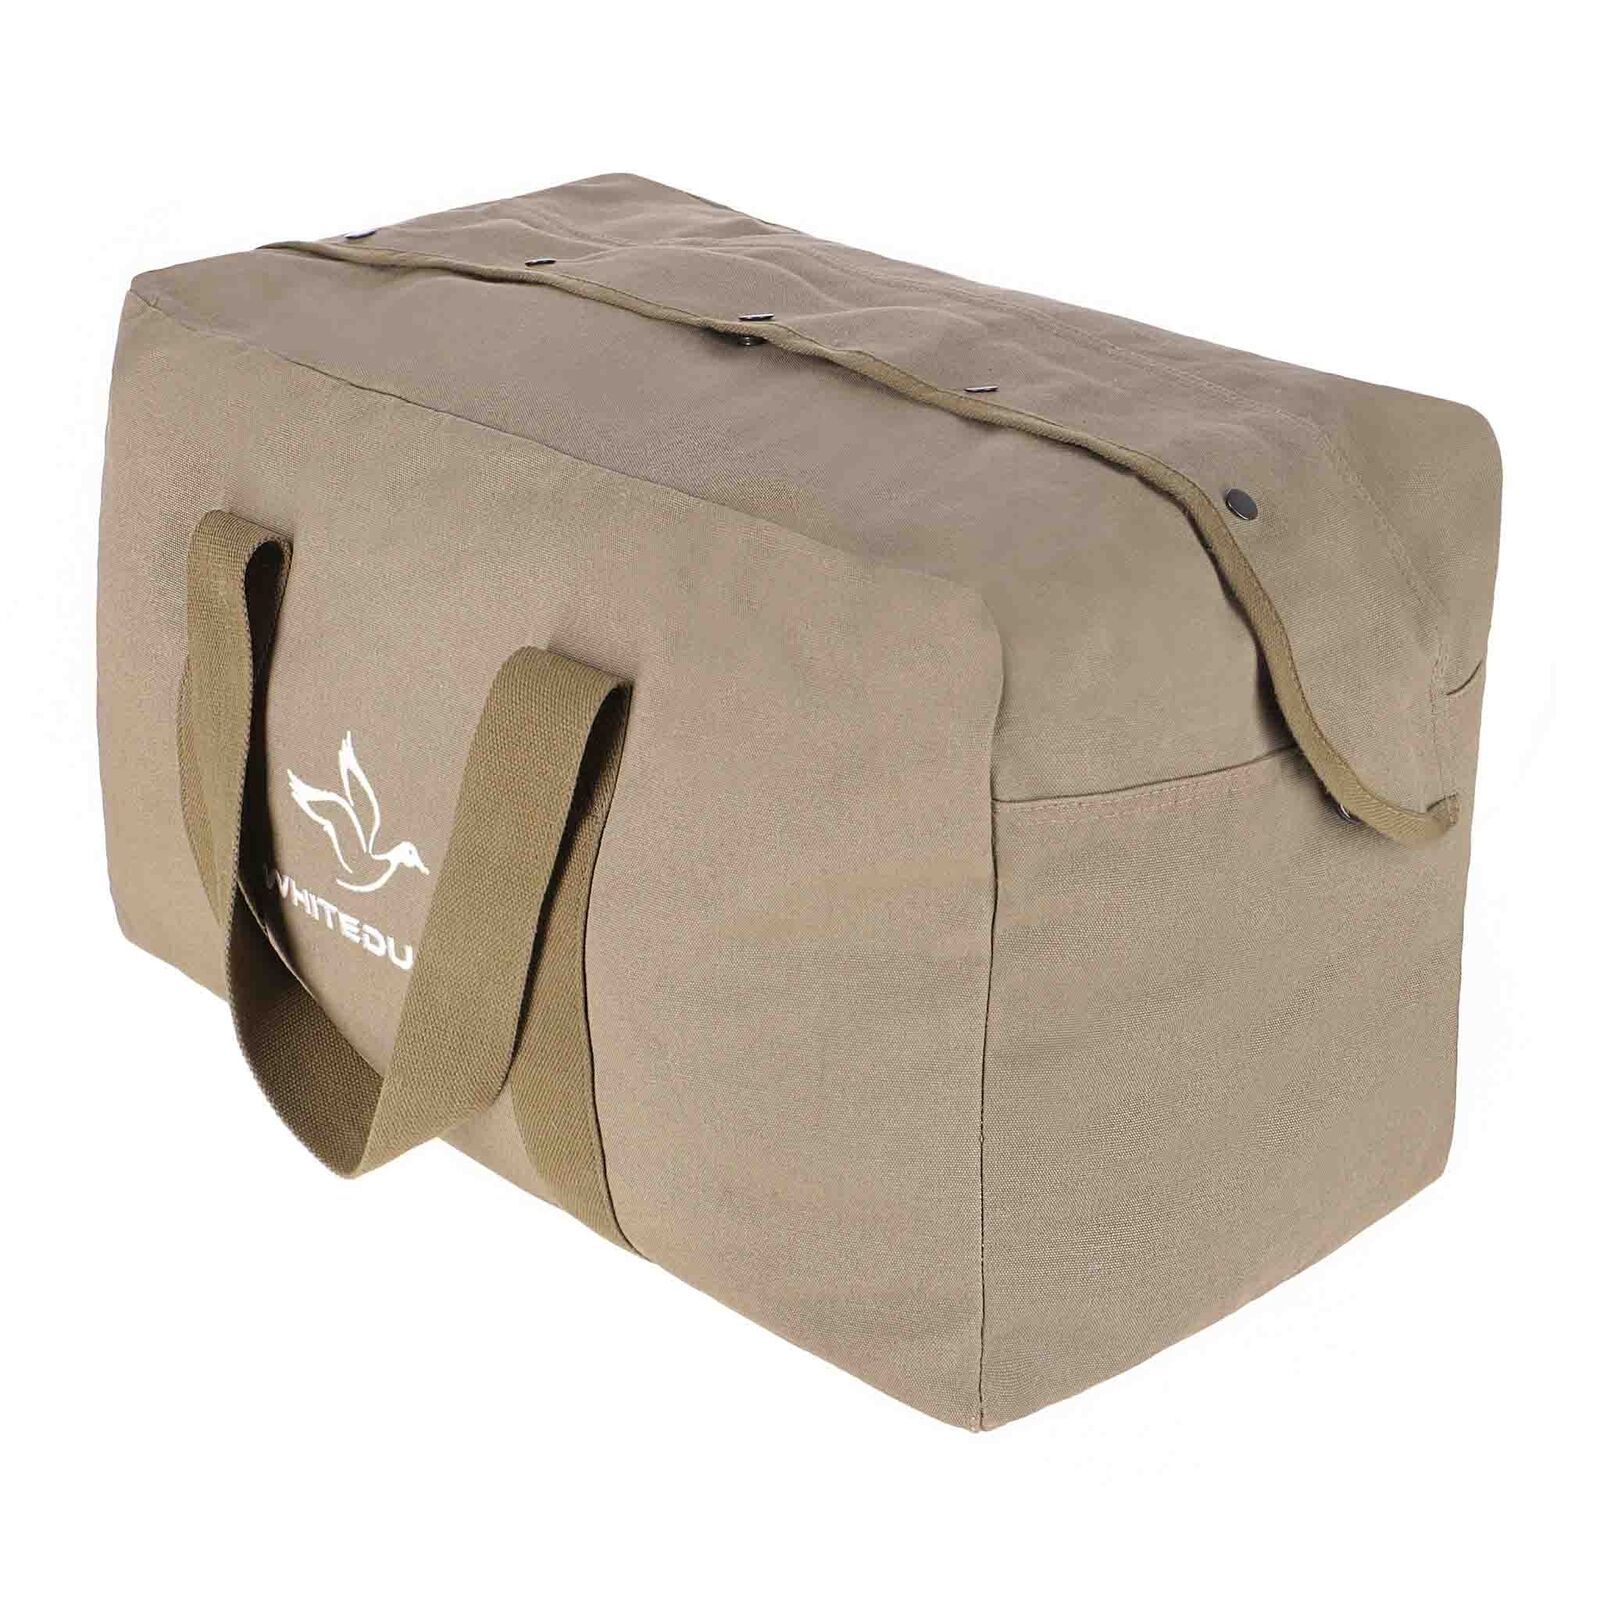 WHITEDUCK Hoplite Parachute Cargo Bag, Military Duffel Standard 24